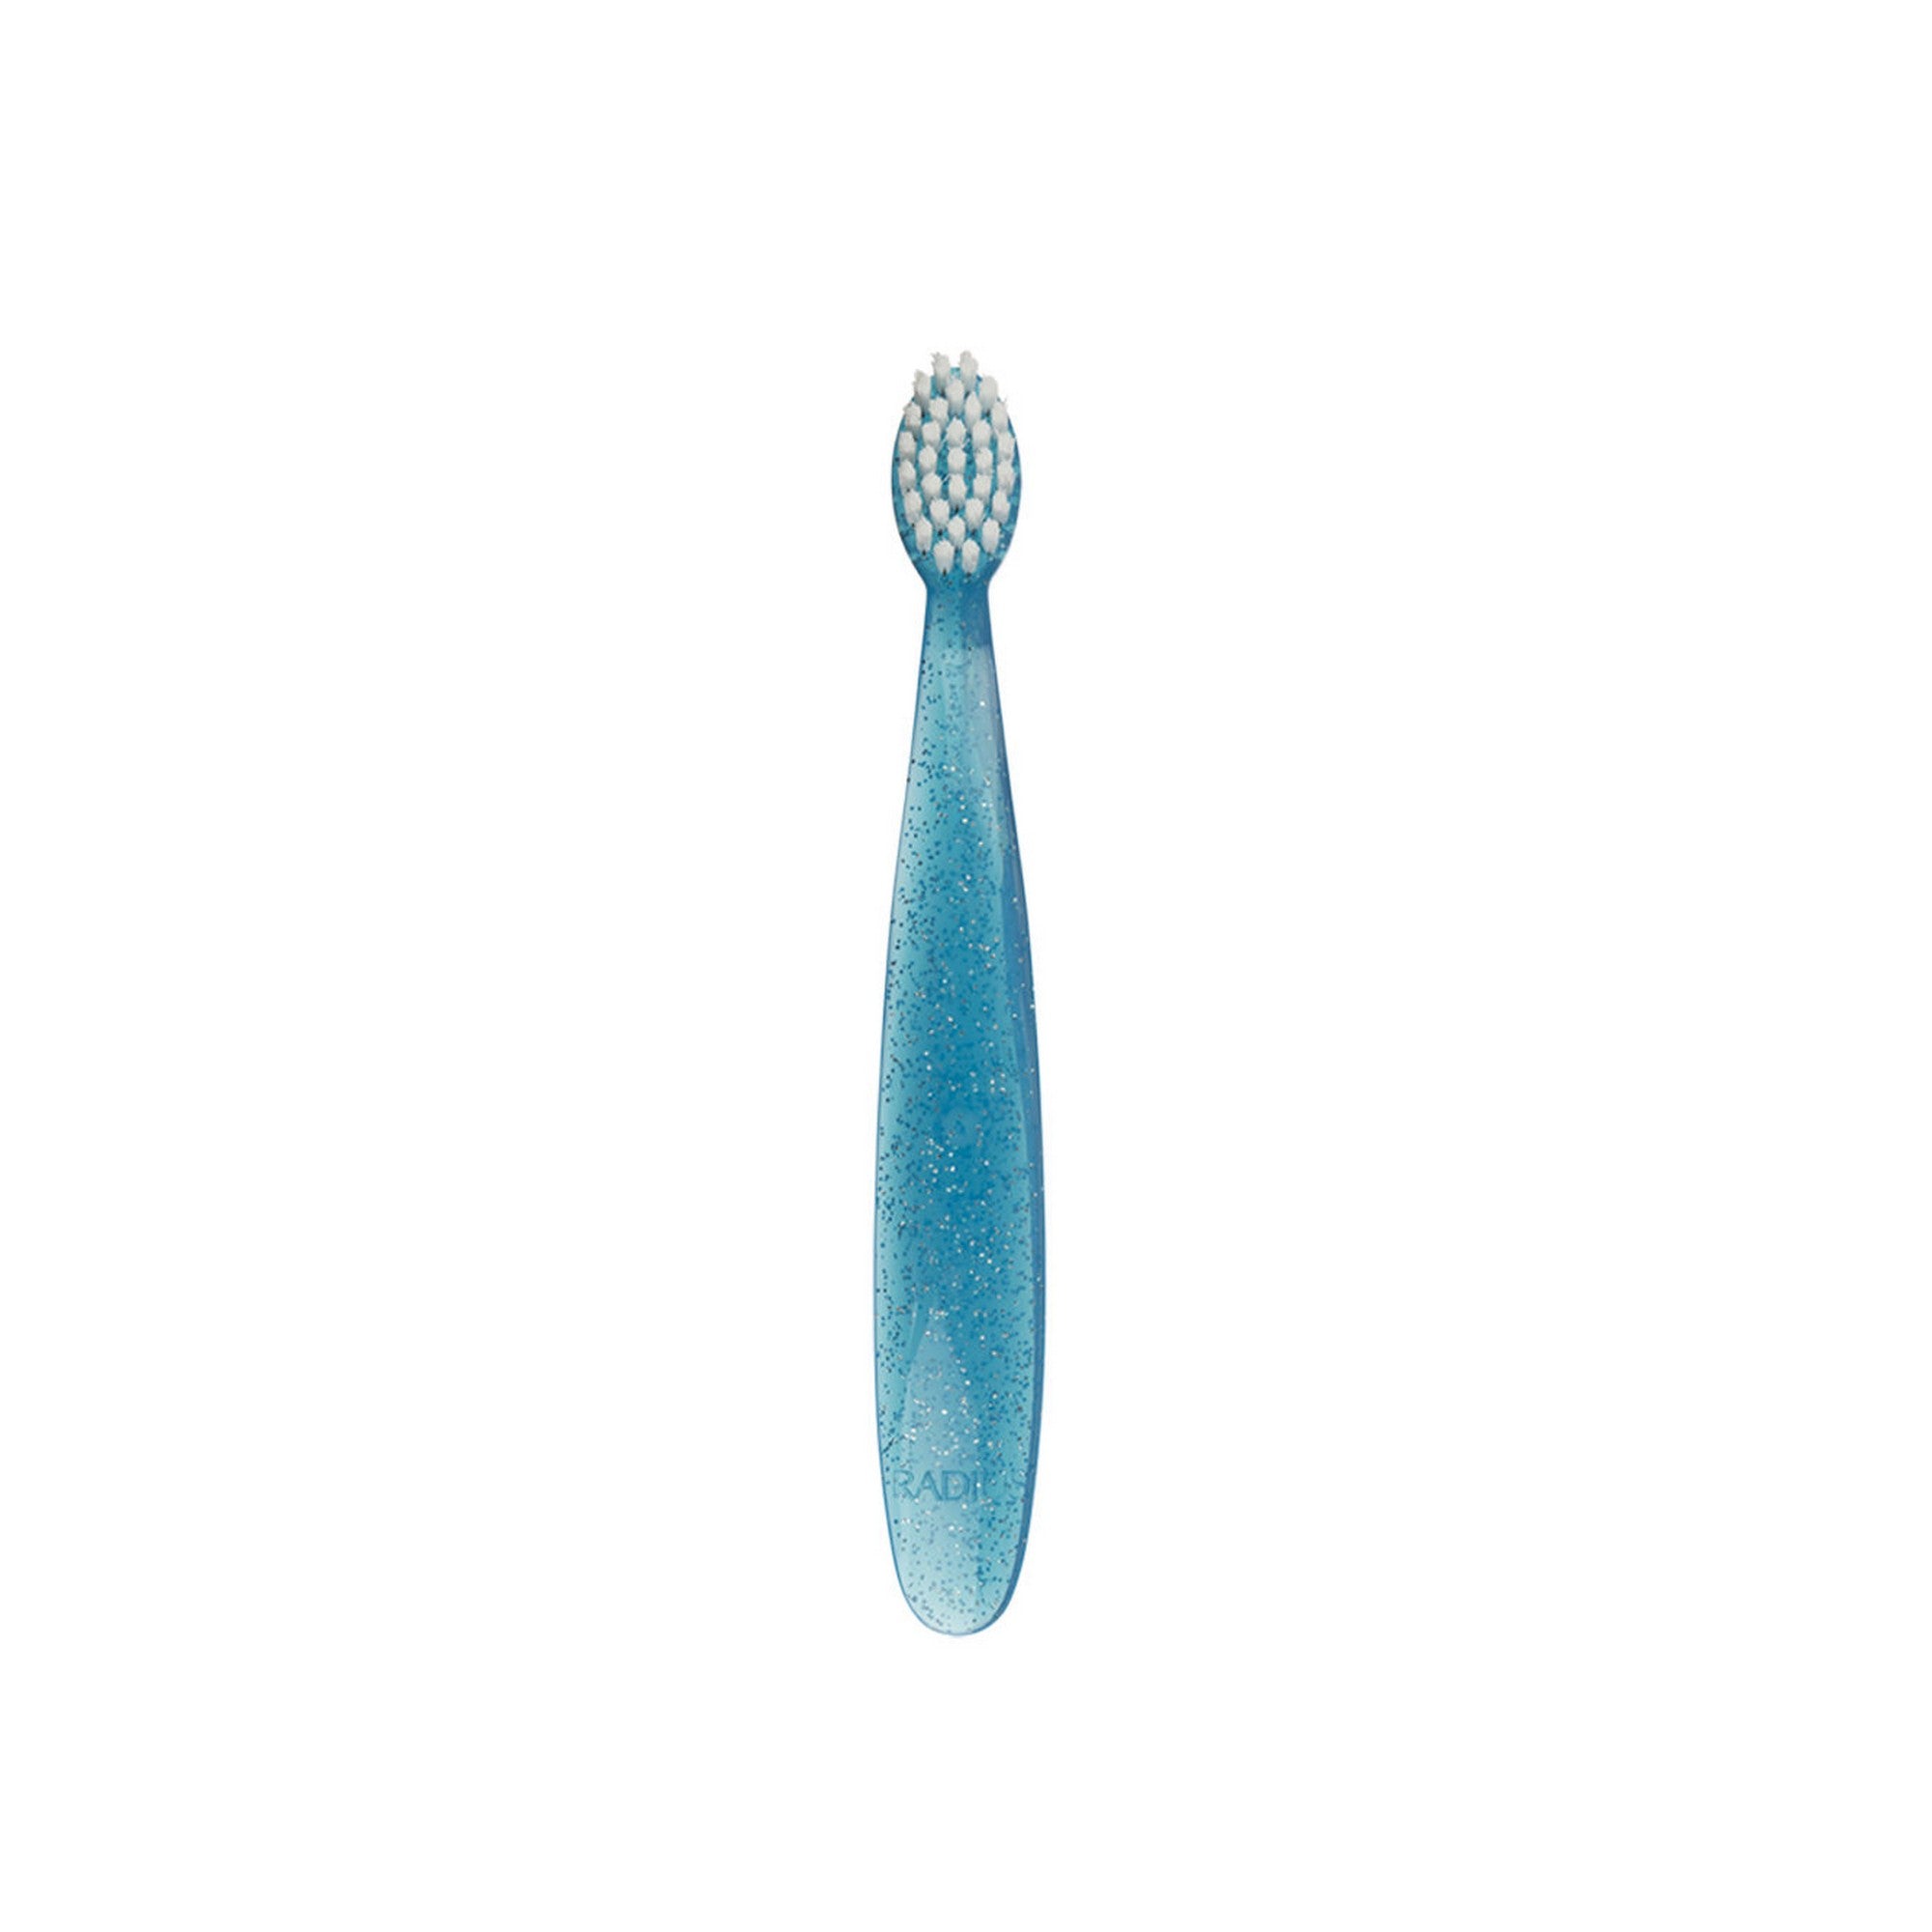 Radius Totz Brush – Toothbrush for Toddlers 18 months+